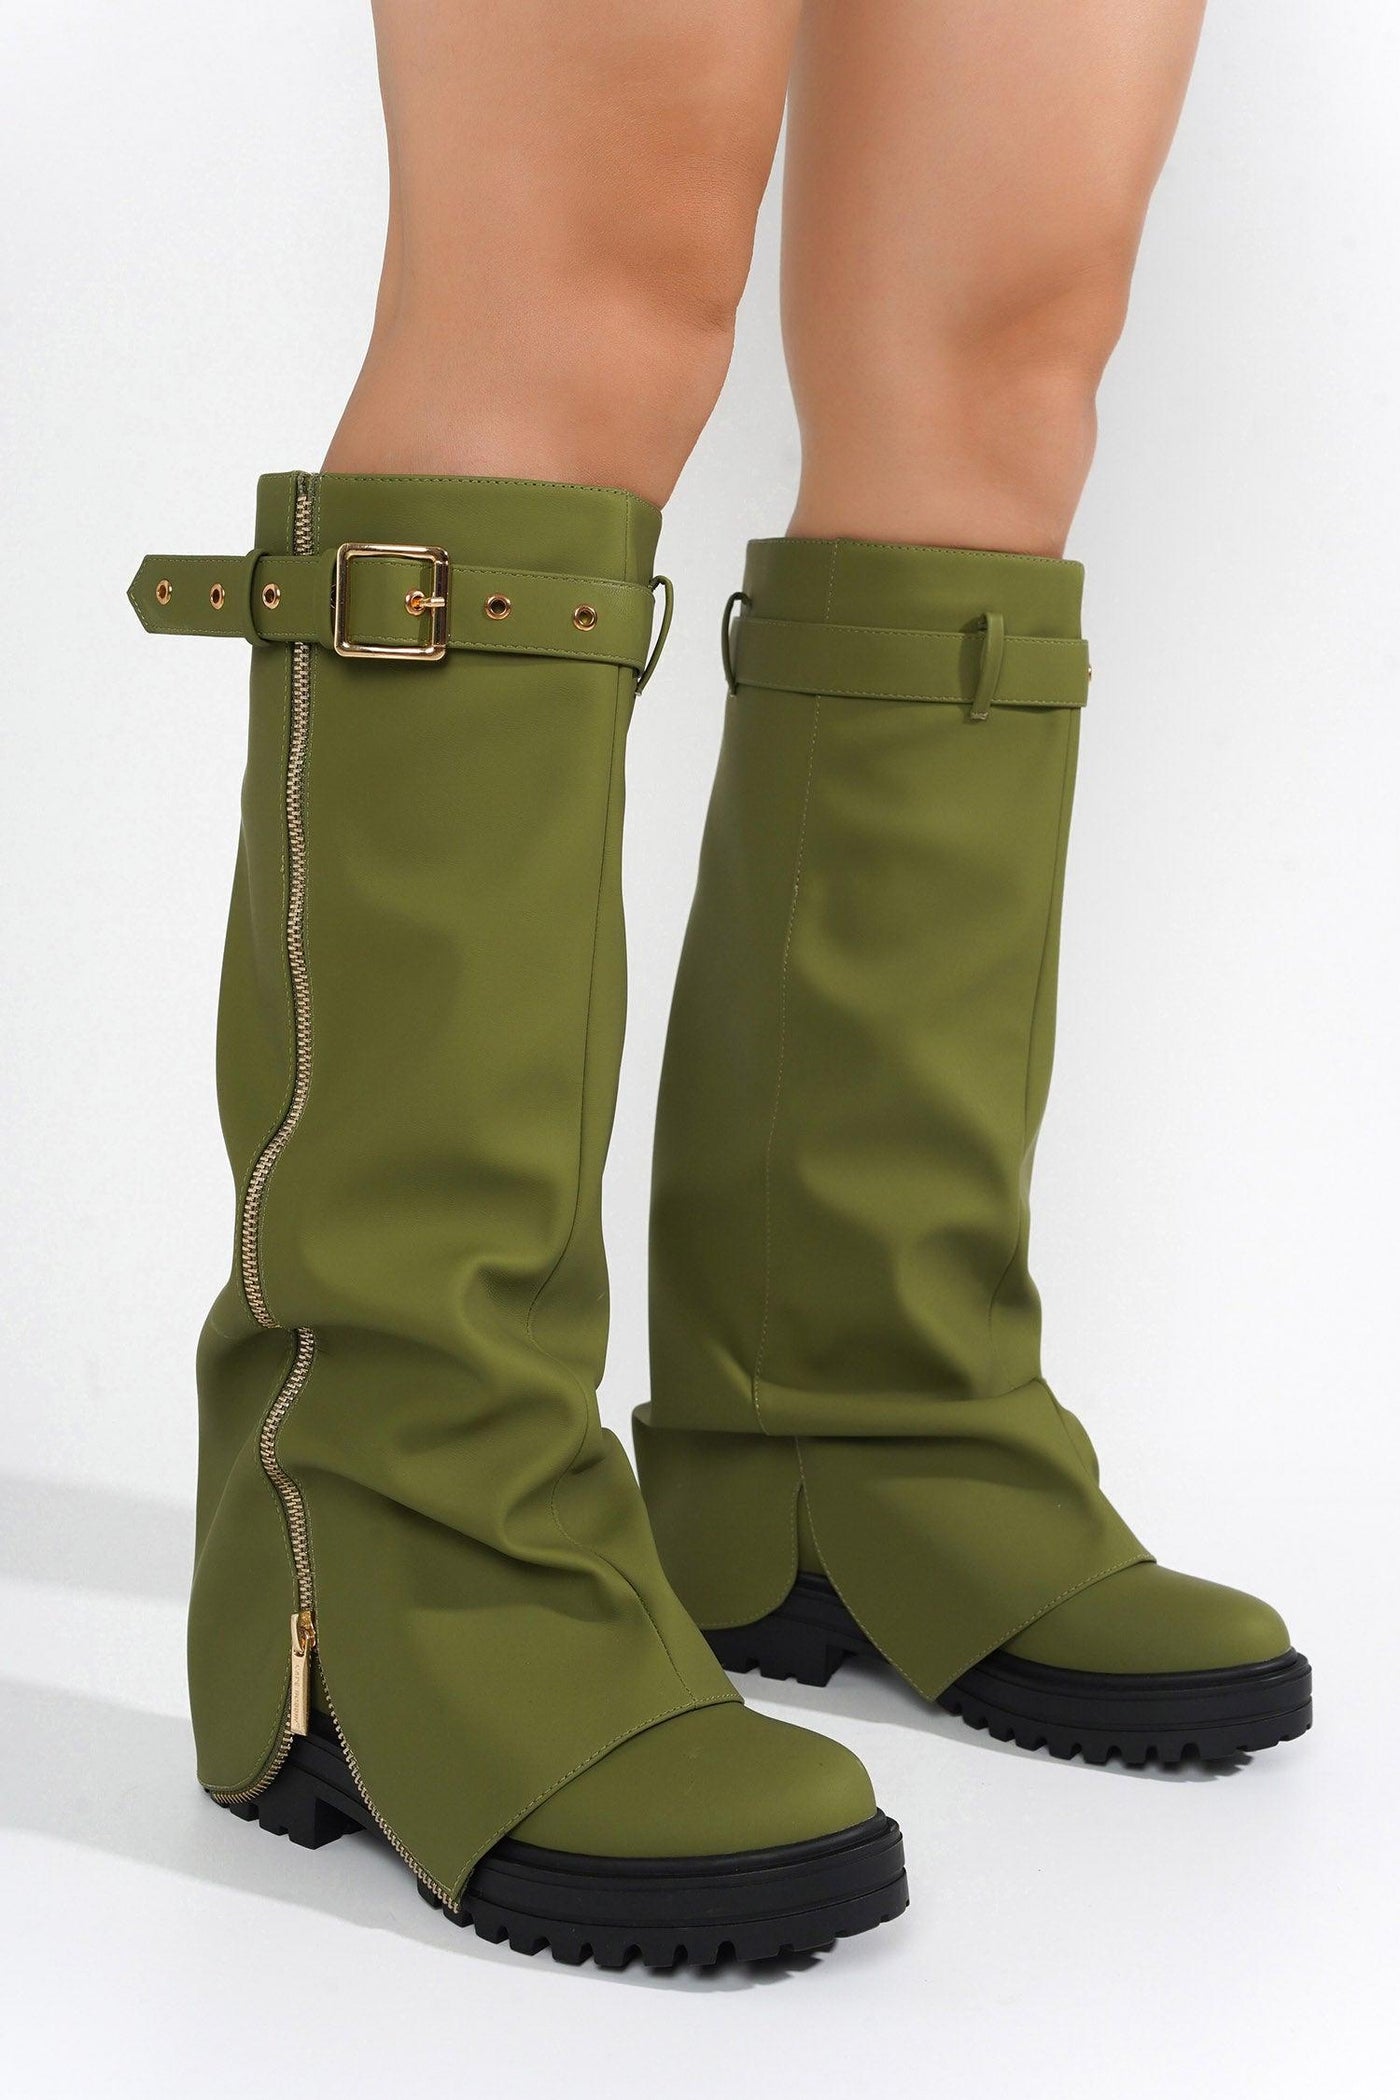 FUNAFUTI - OLIVE Thigh High Boots